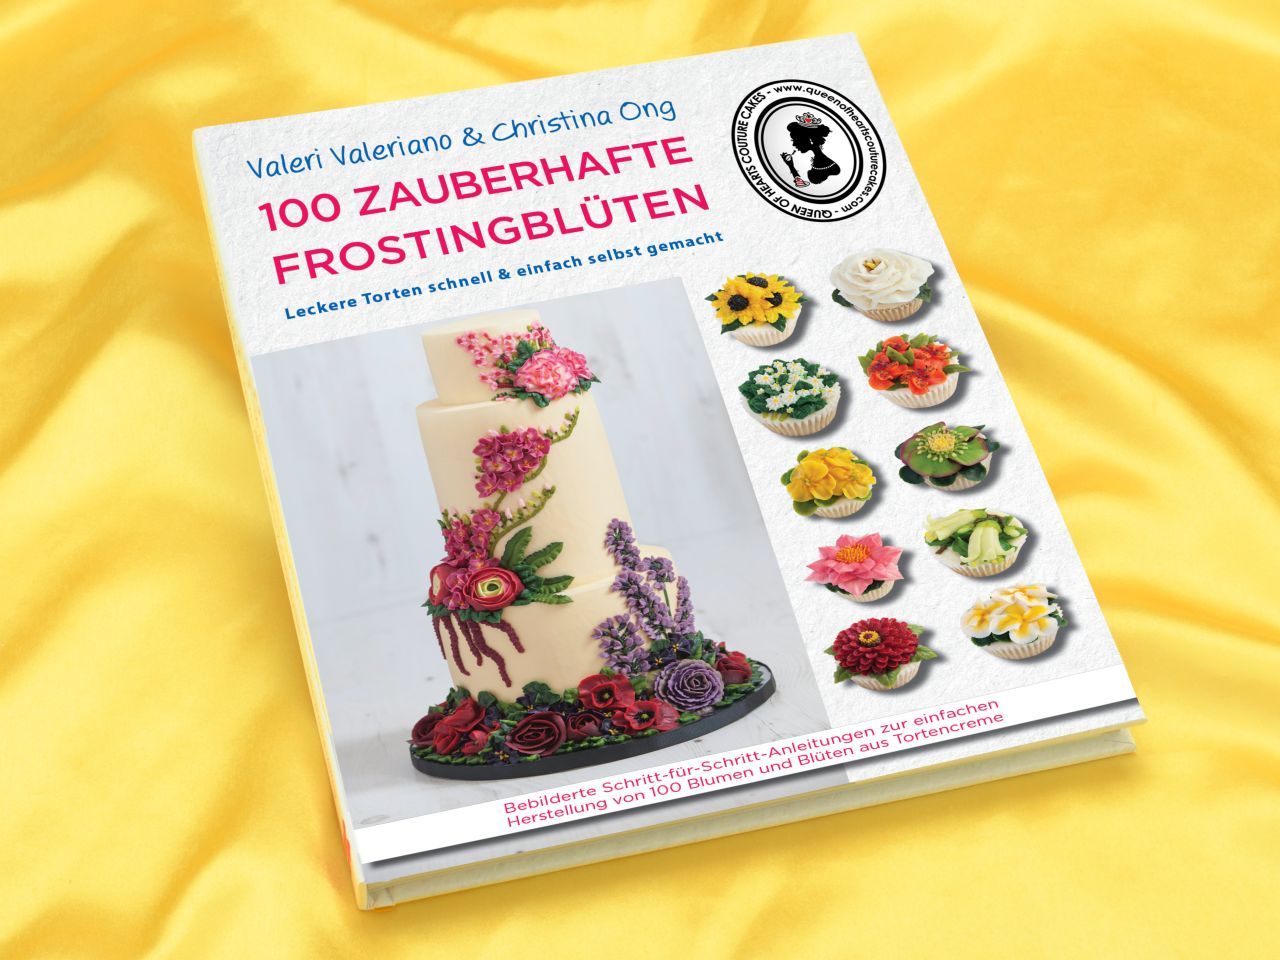 100 zauberhafte Frostingblüten von Cake & Bake Verlag